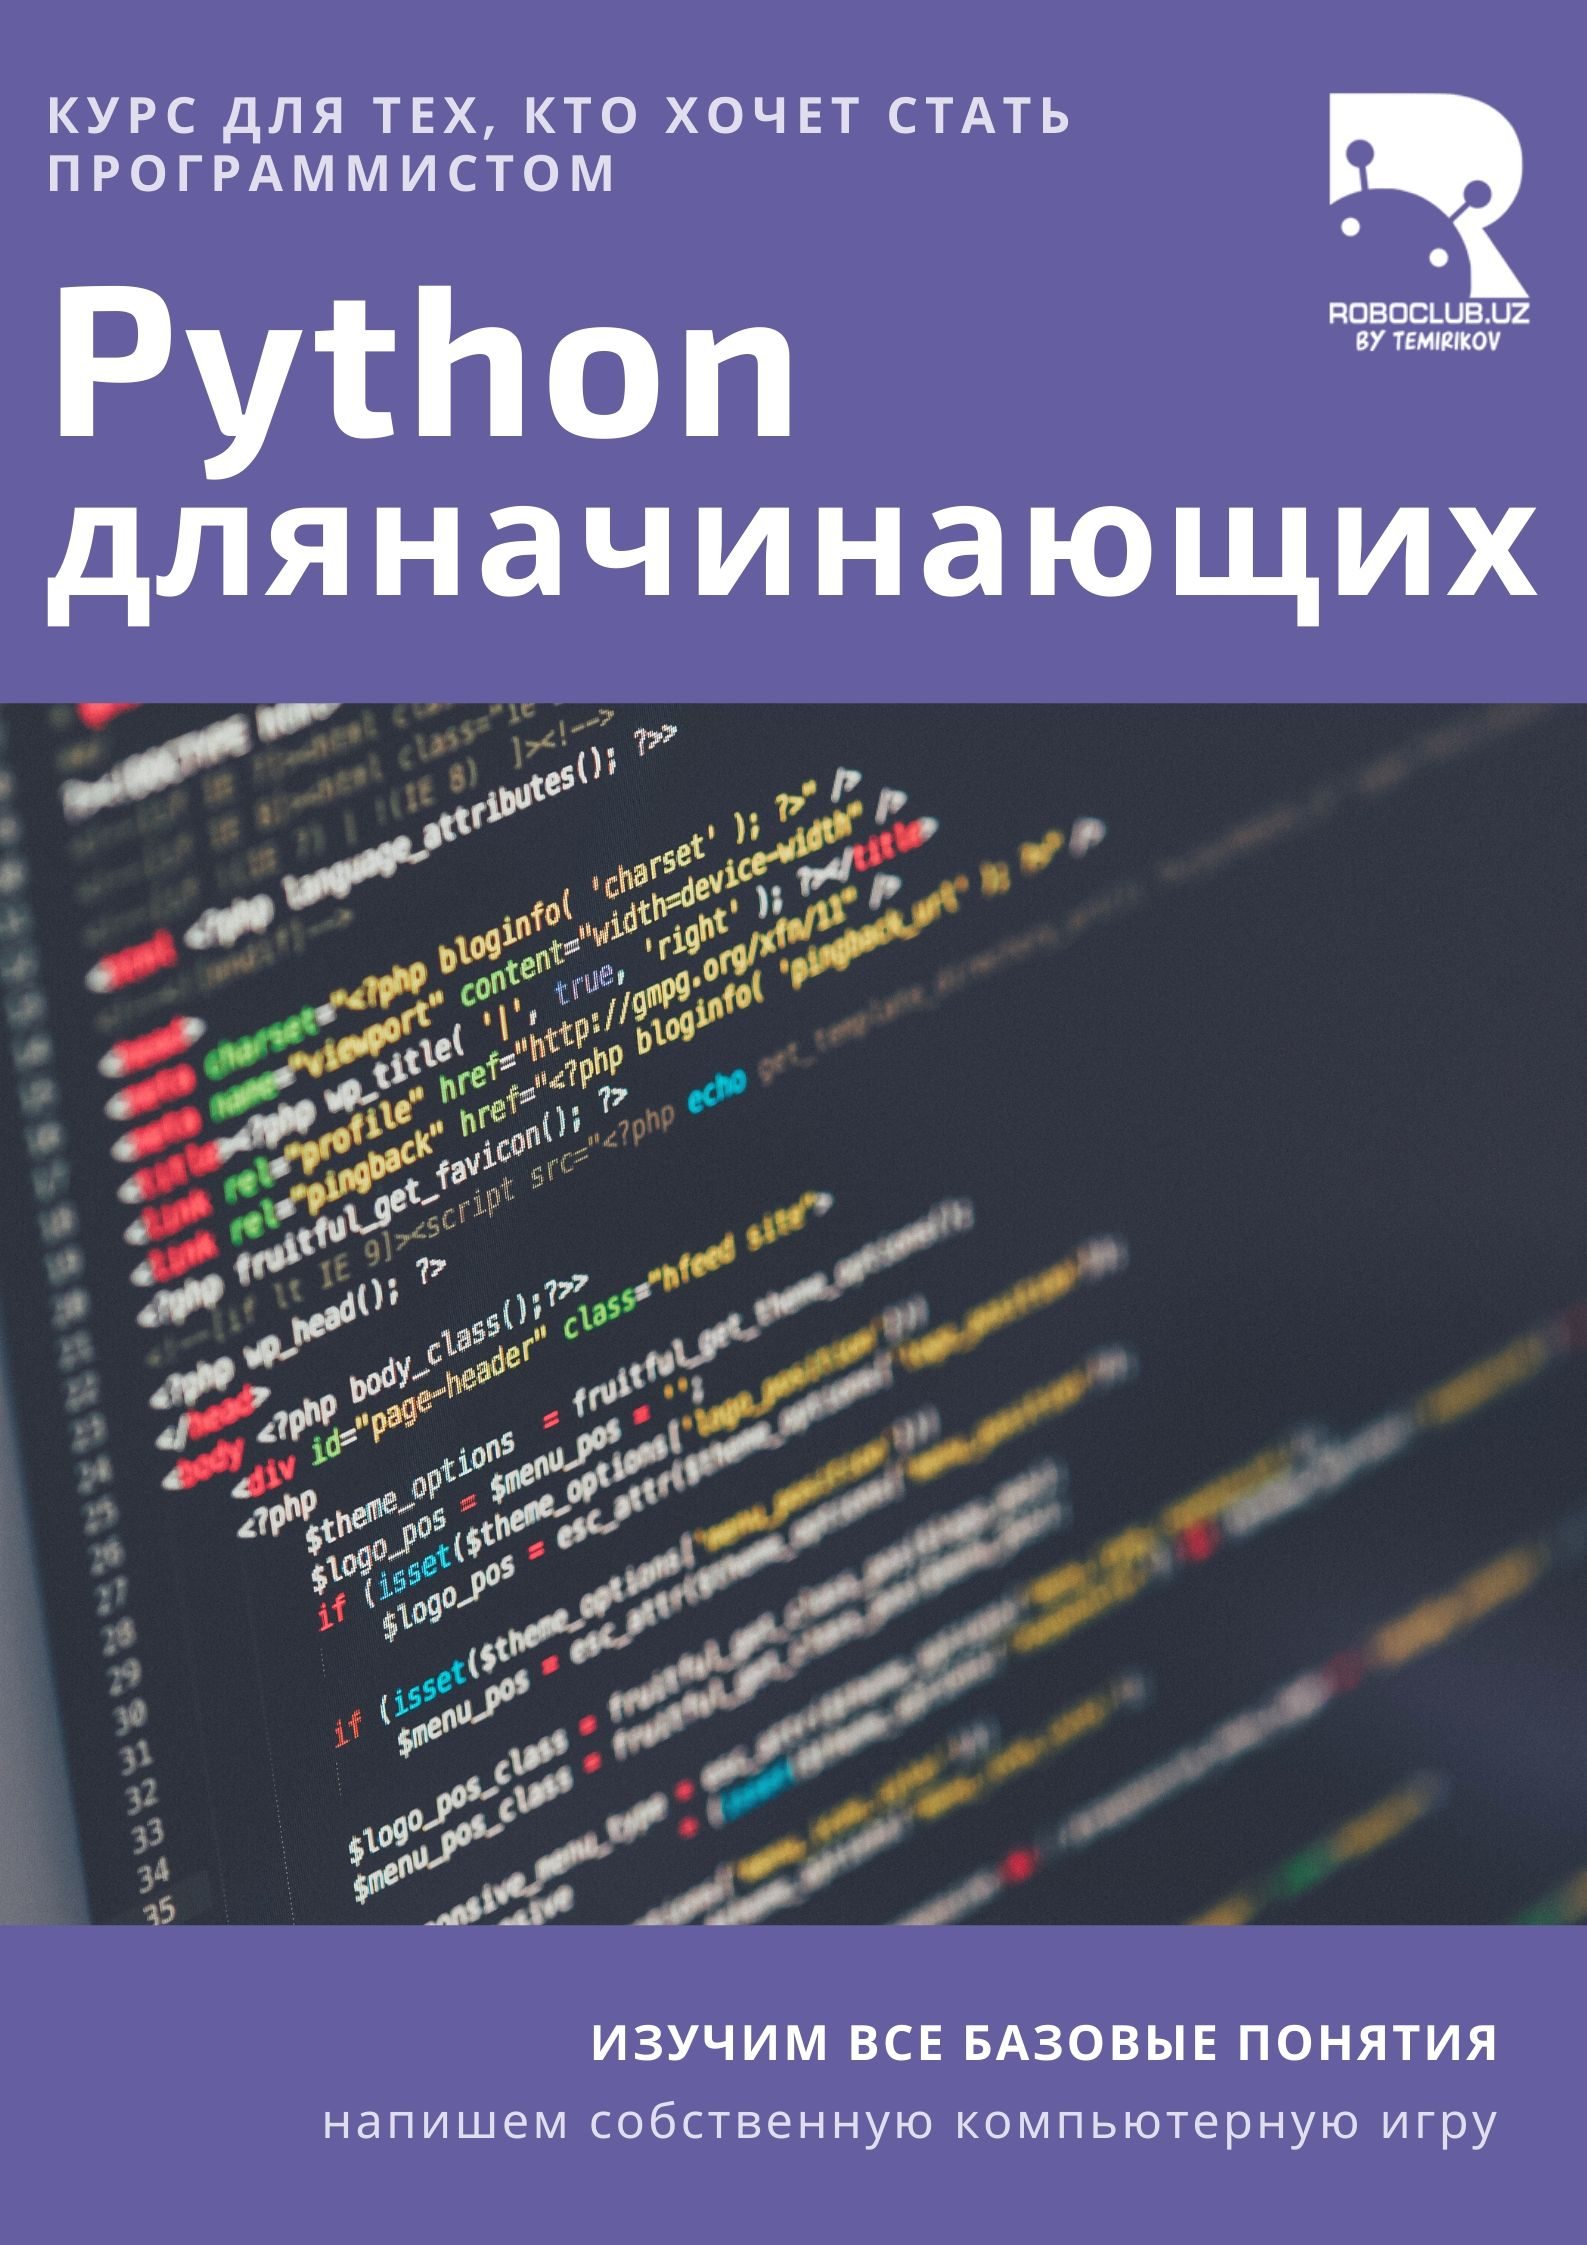 Полный курс python. Курсы Пайтон. Курсы Python. Python курсы для начинающих. Питон курс для начинающих.